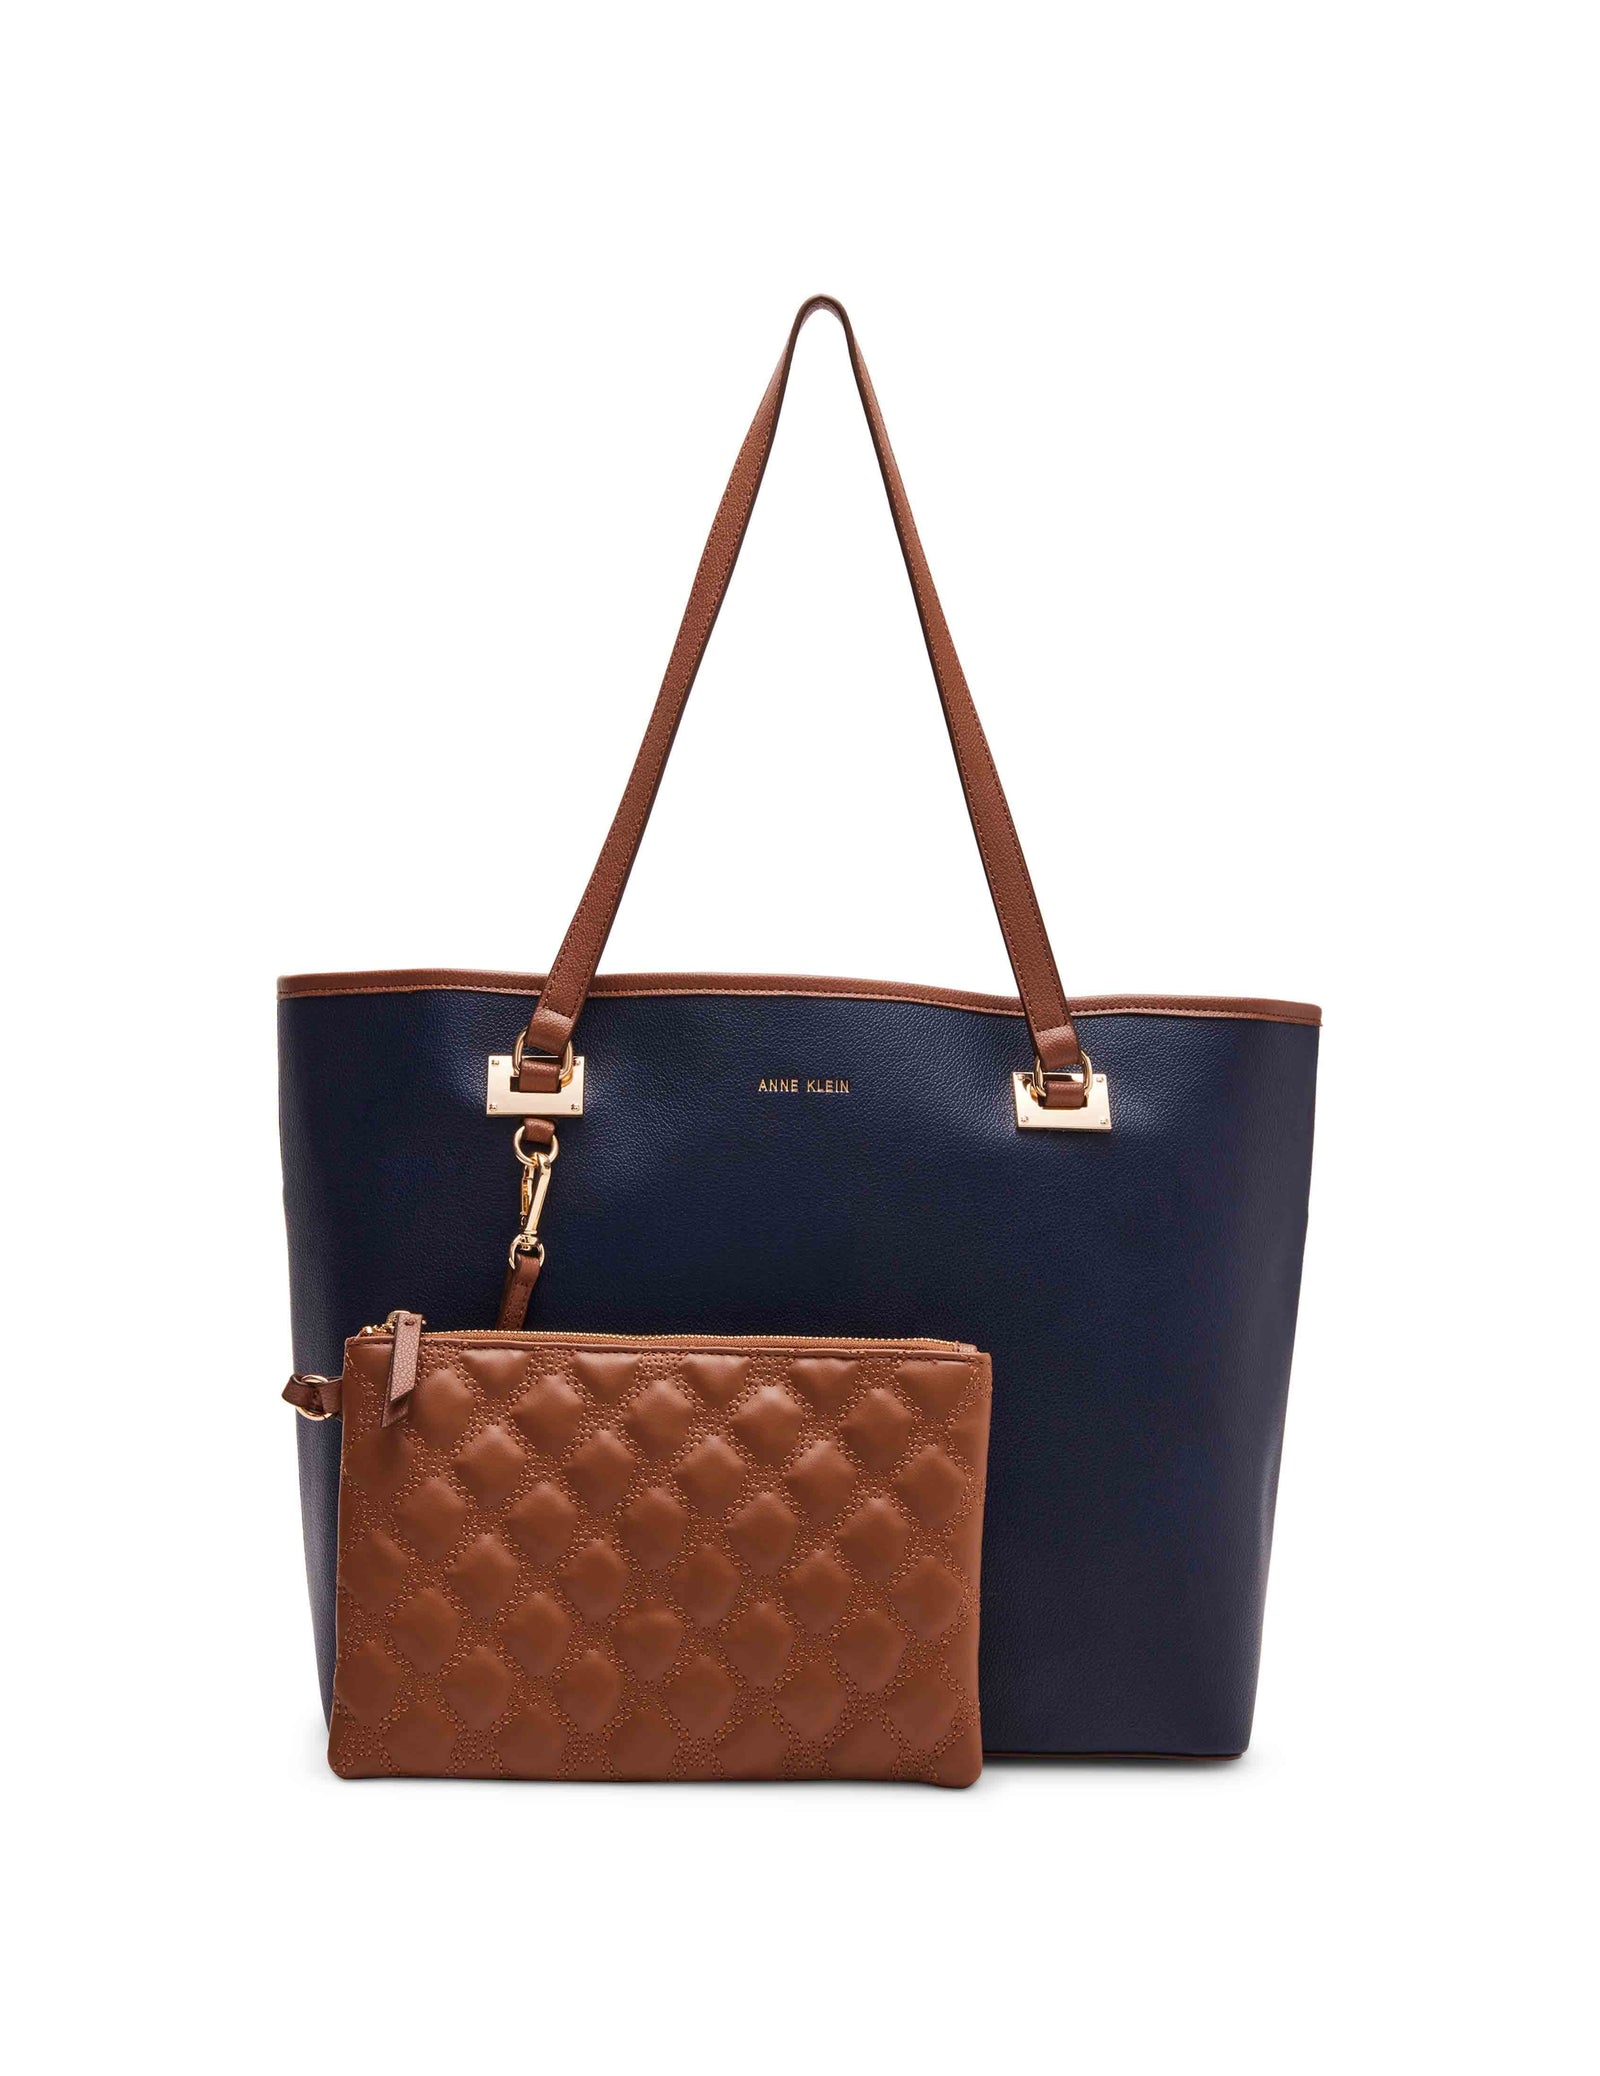 CALVIN KLEIN Orange Leather Tote Handbag Purse - Walmart.com